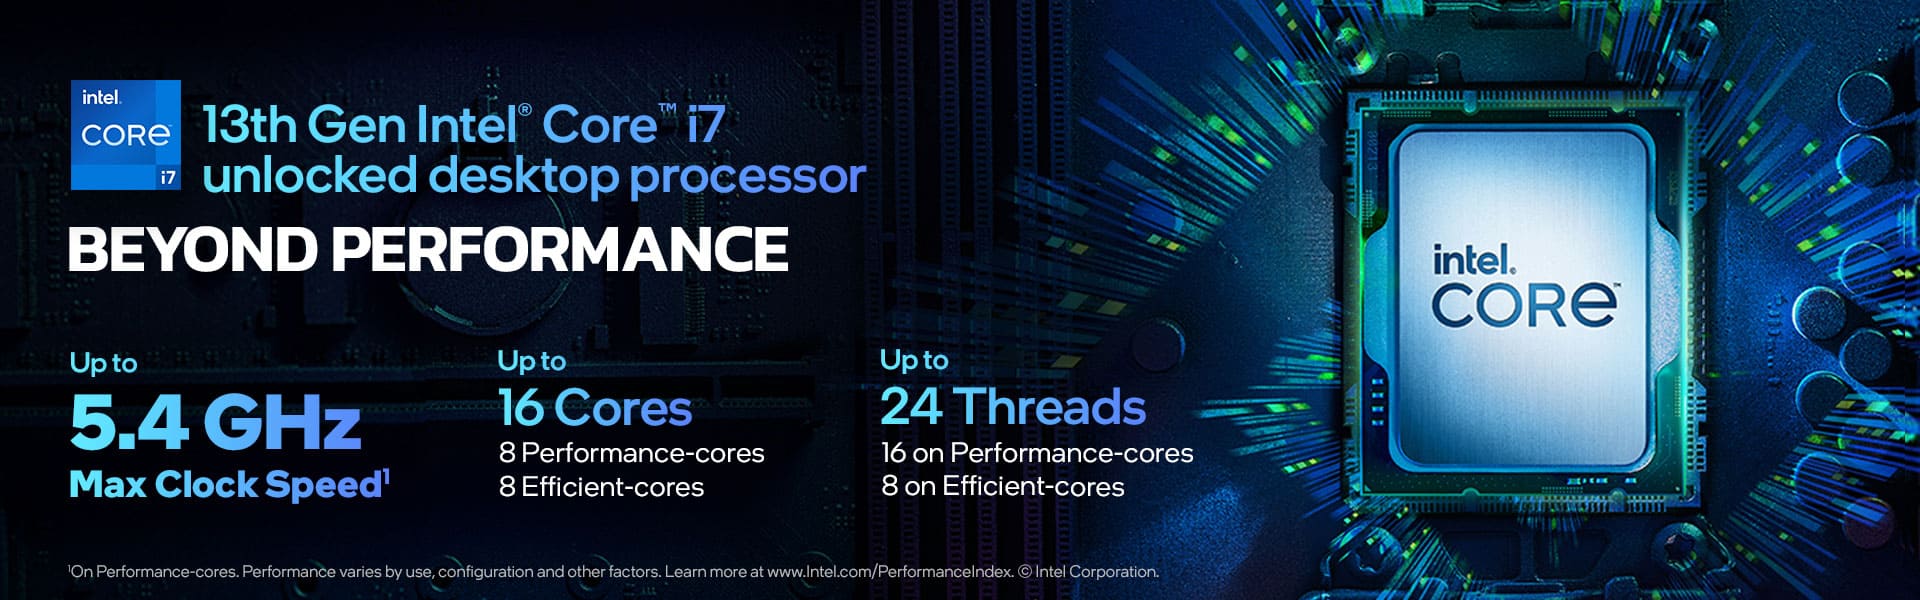 Intel i5 14th generation